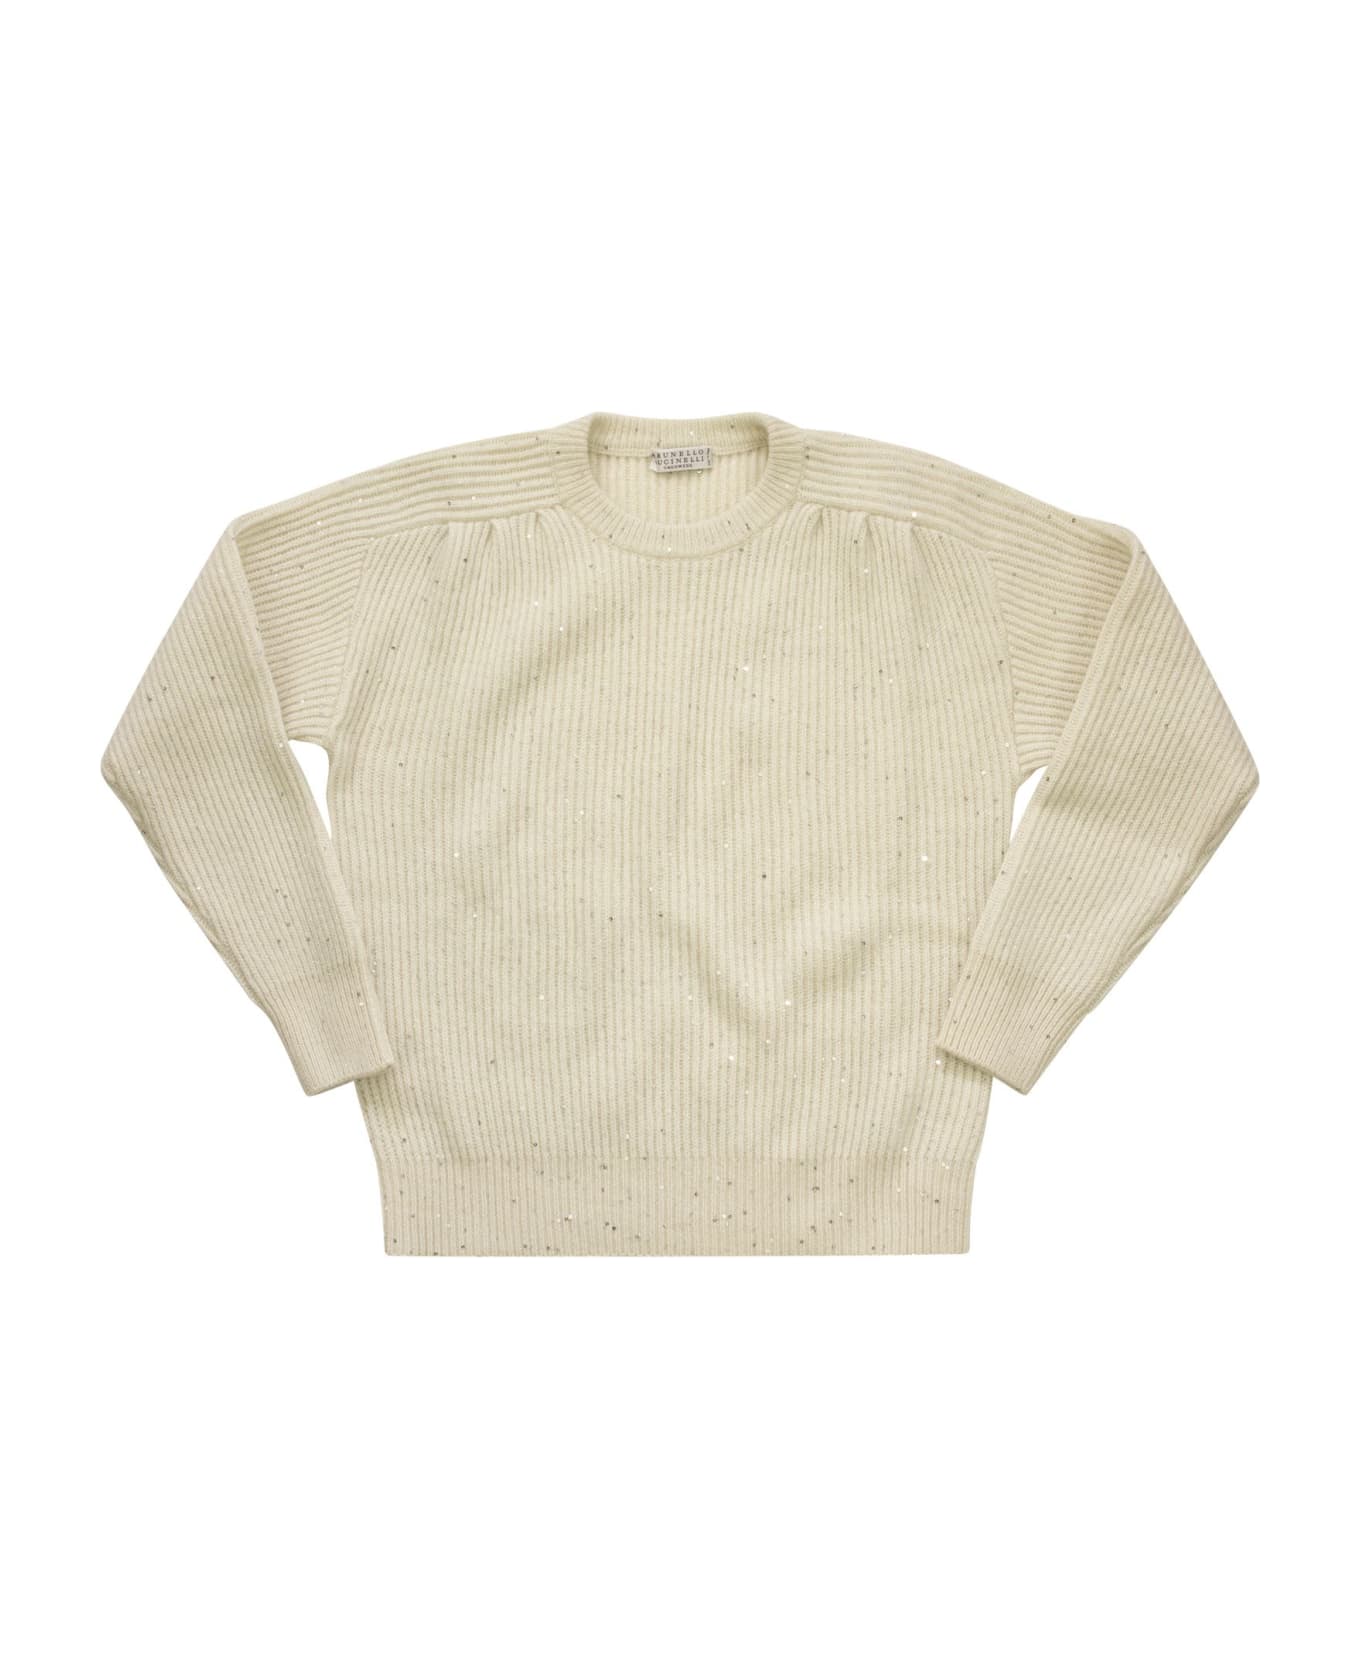 Brunello Cucinelli Cashmere And Wool Blend Sweater - Cream